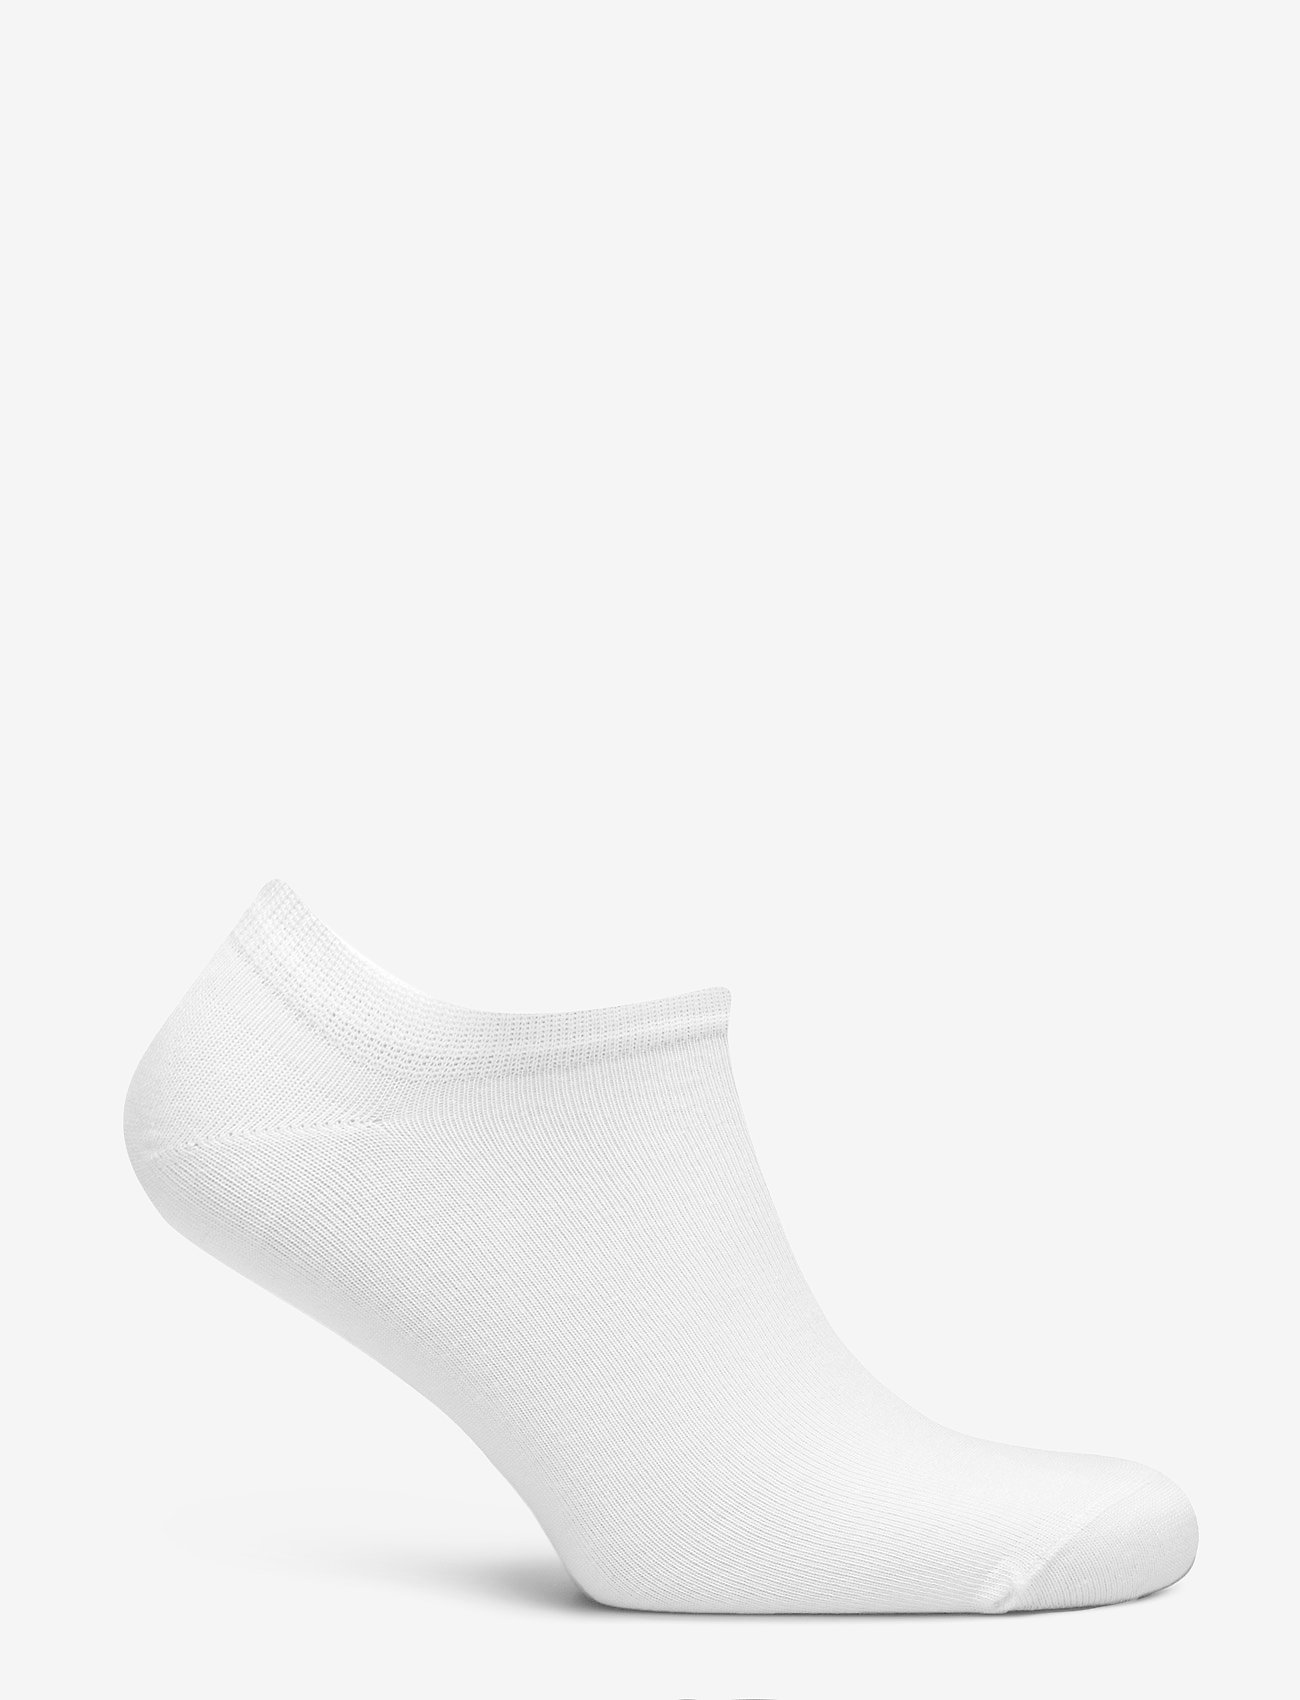 Decoy - Ladies thin sneaker sock - white - 1